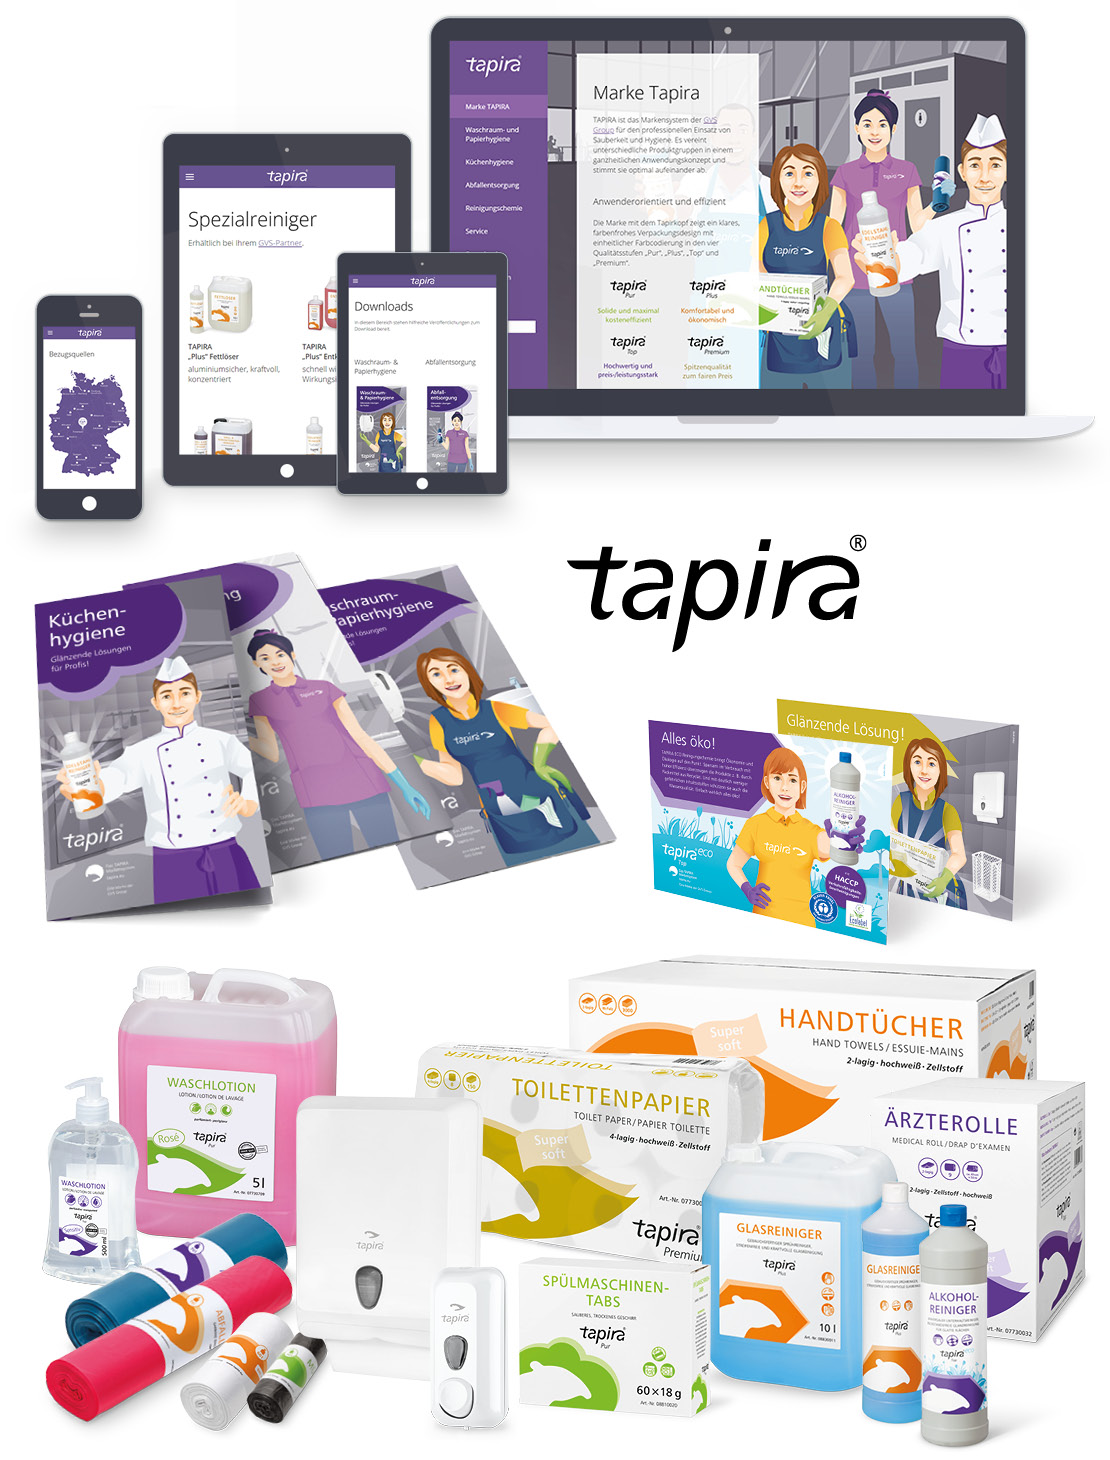 Tapira – Multiformes Markenkonzept